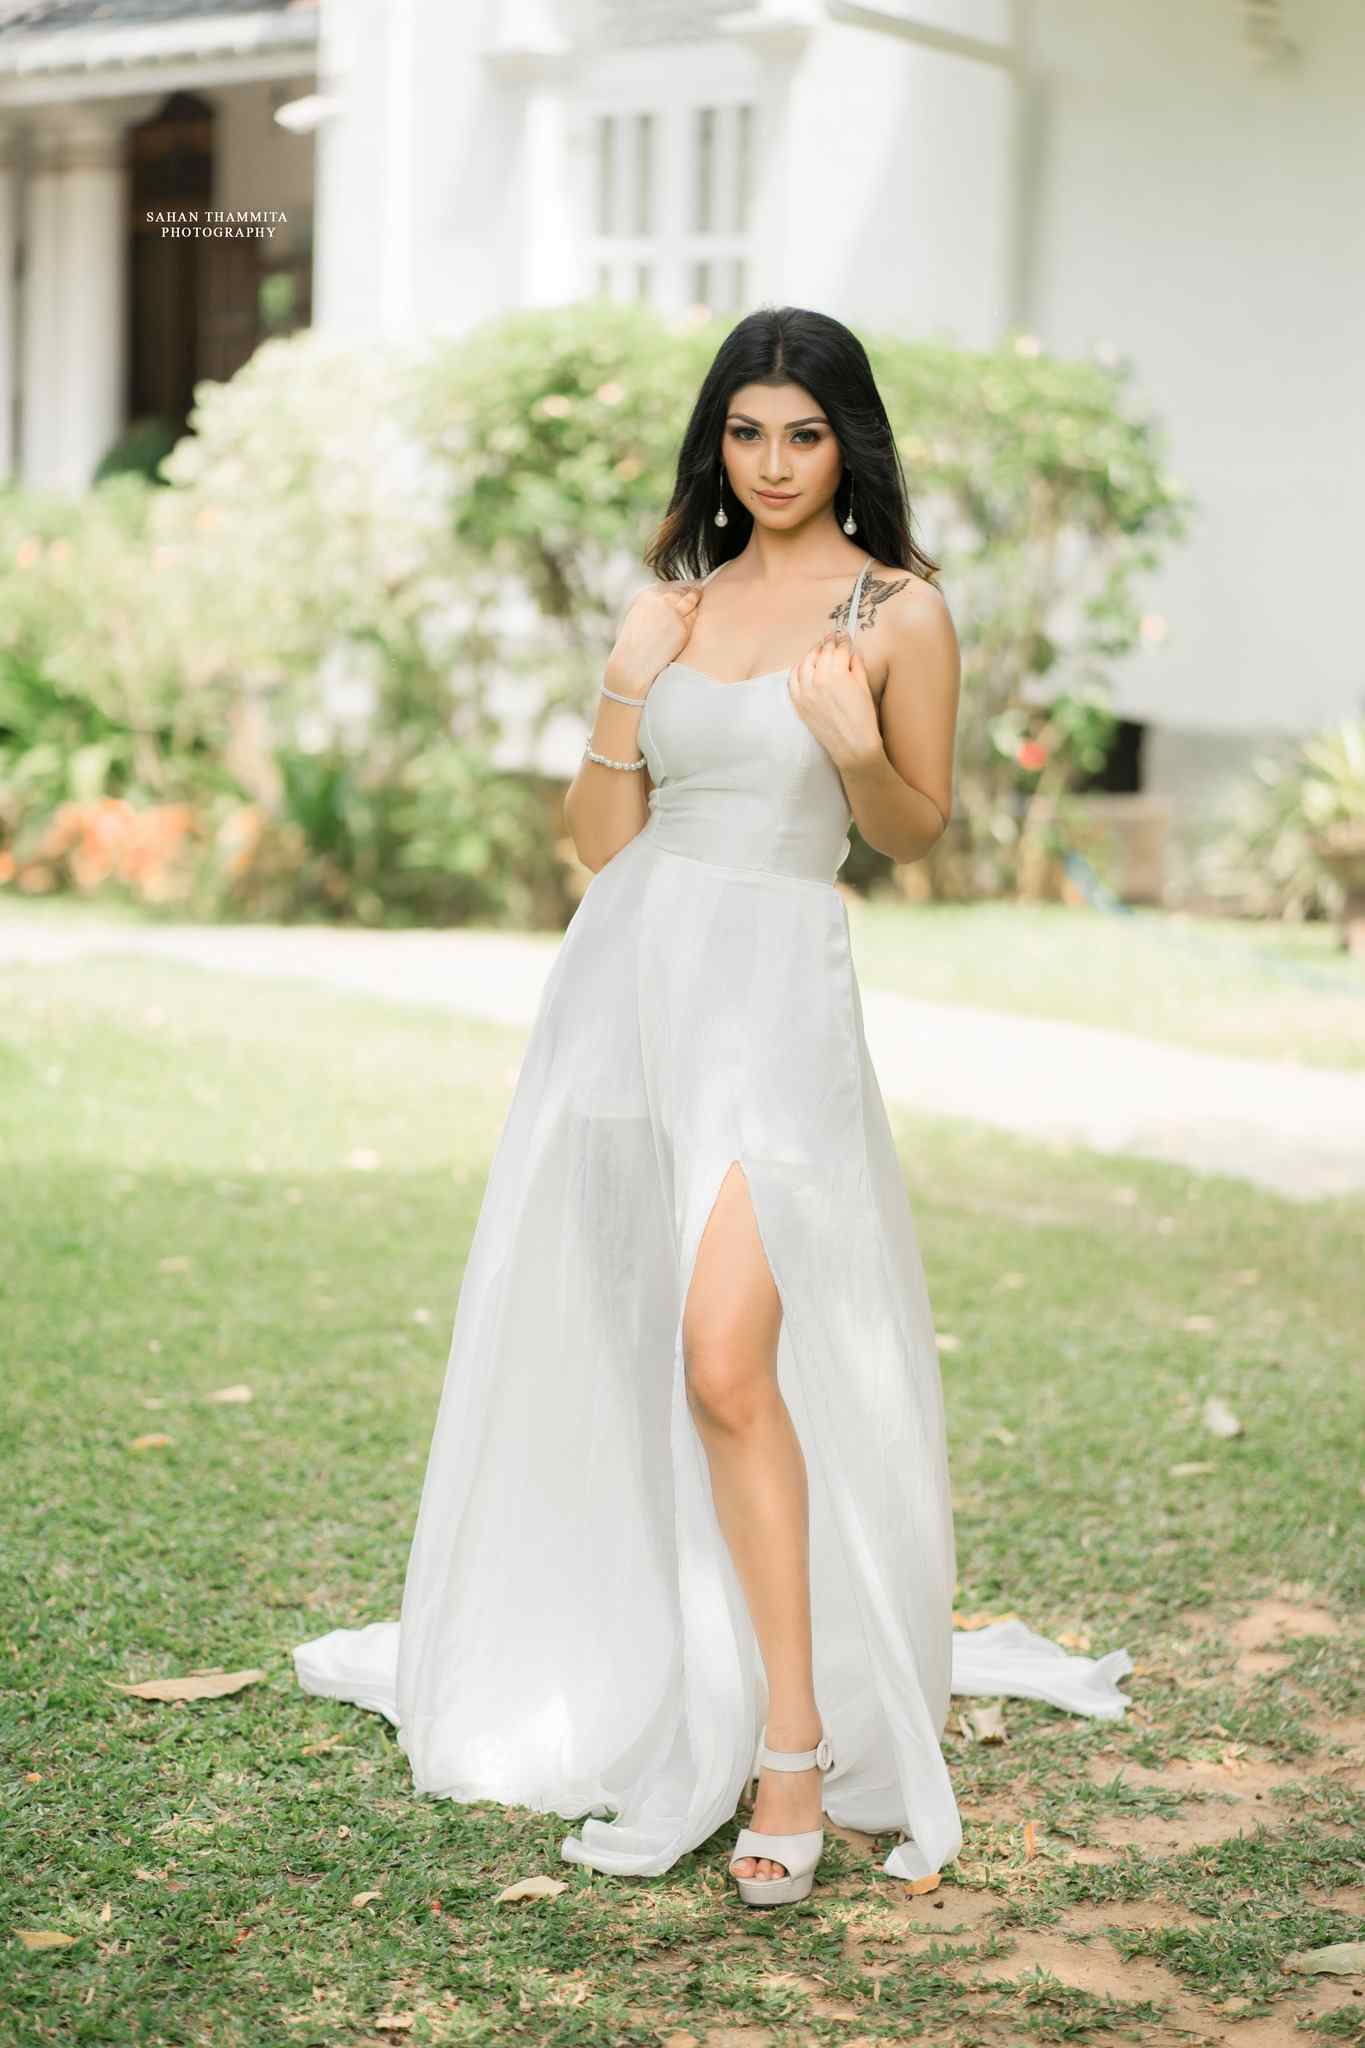 Pooja Vindy as a charming Western bride. Sahan Thammita Photography. Sri Lankan Bridal photos. Western brides. Pooja Vindy hot. Hot Sri Lankan girls.